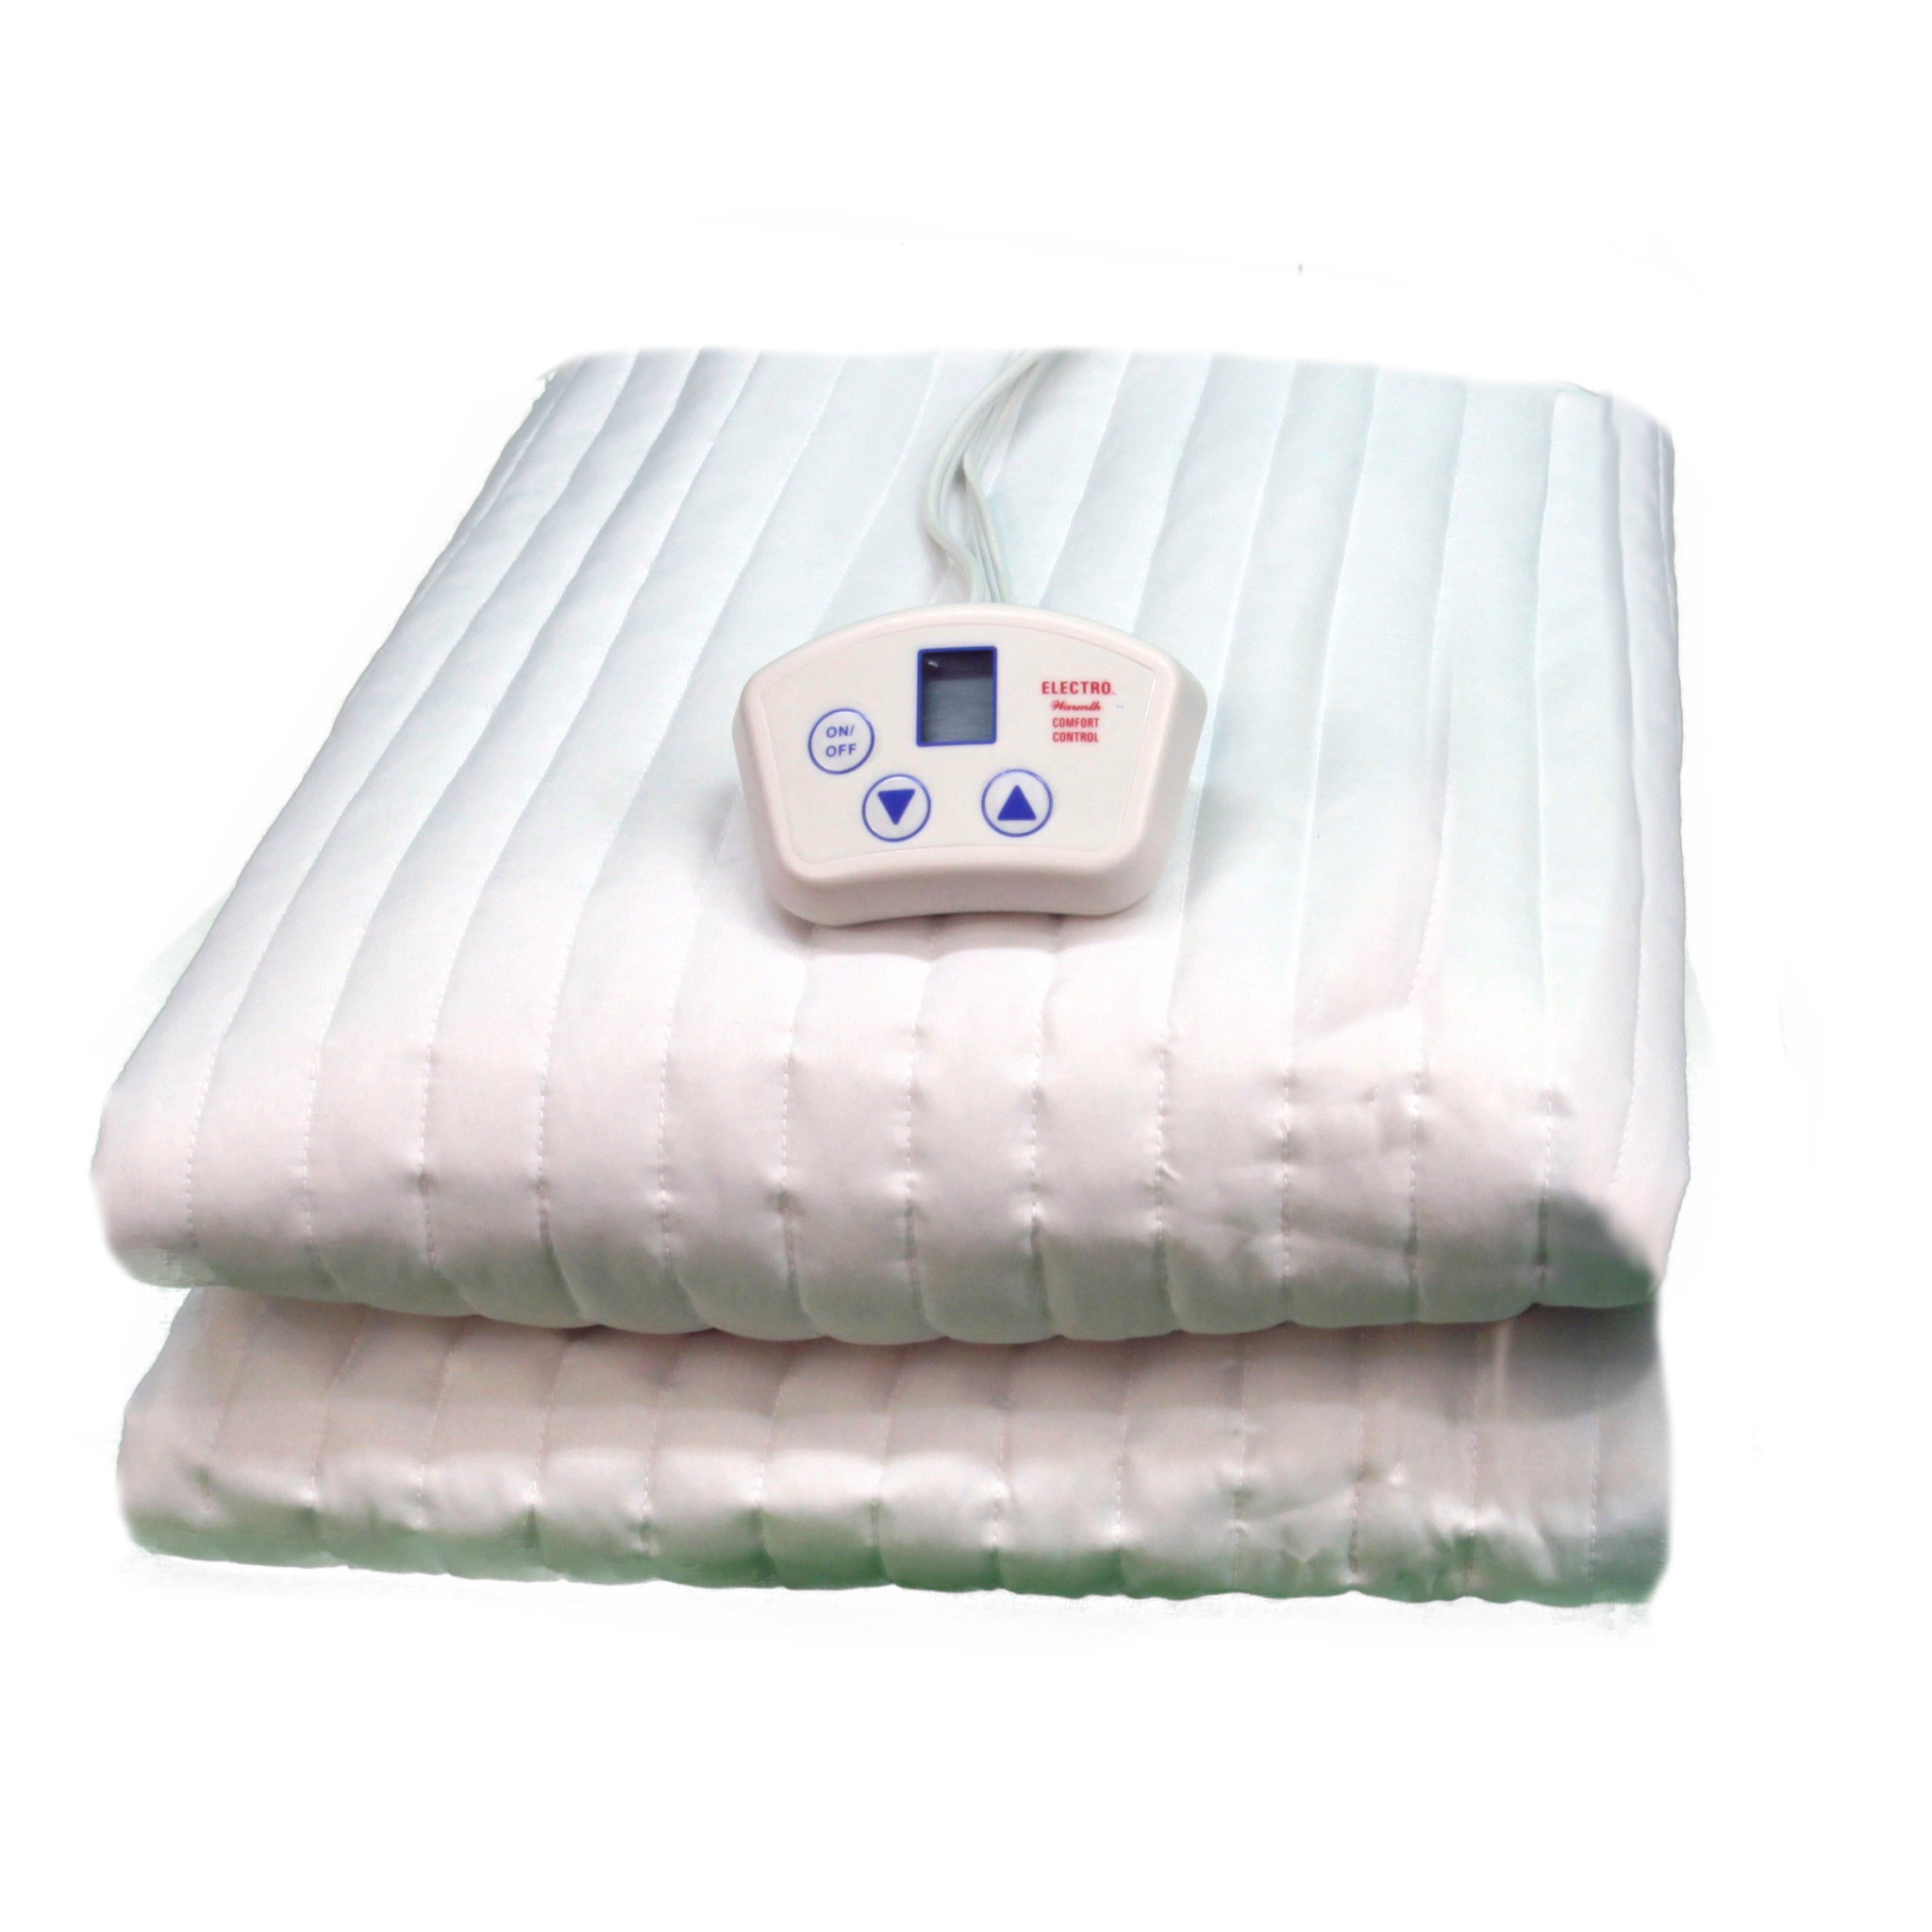 Electrowarmth Massage Table Warmer Heated Mattress Pad